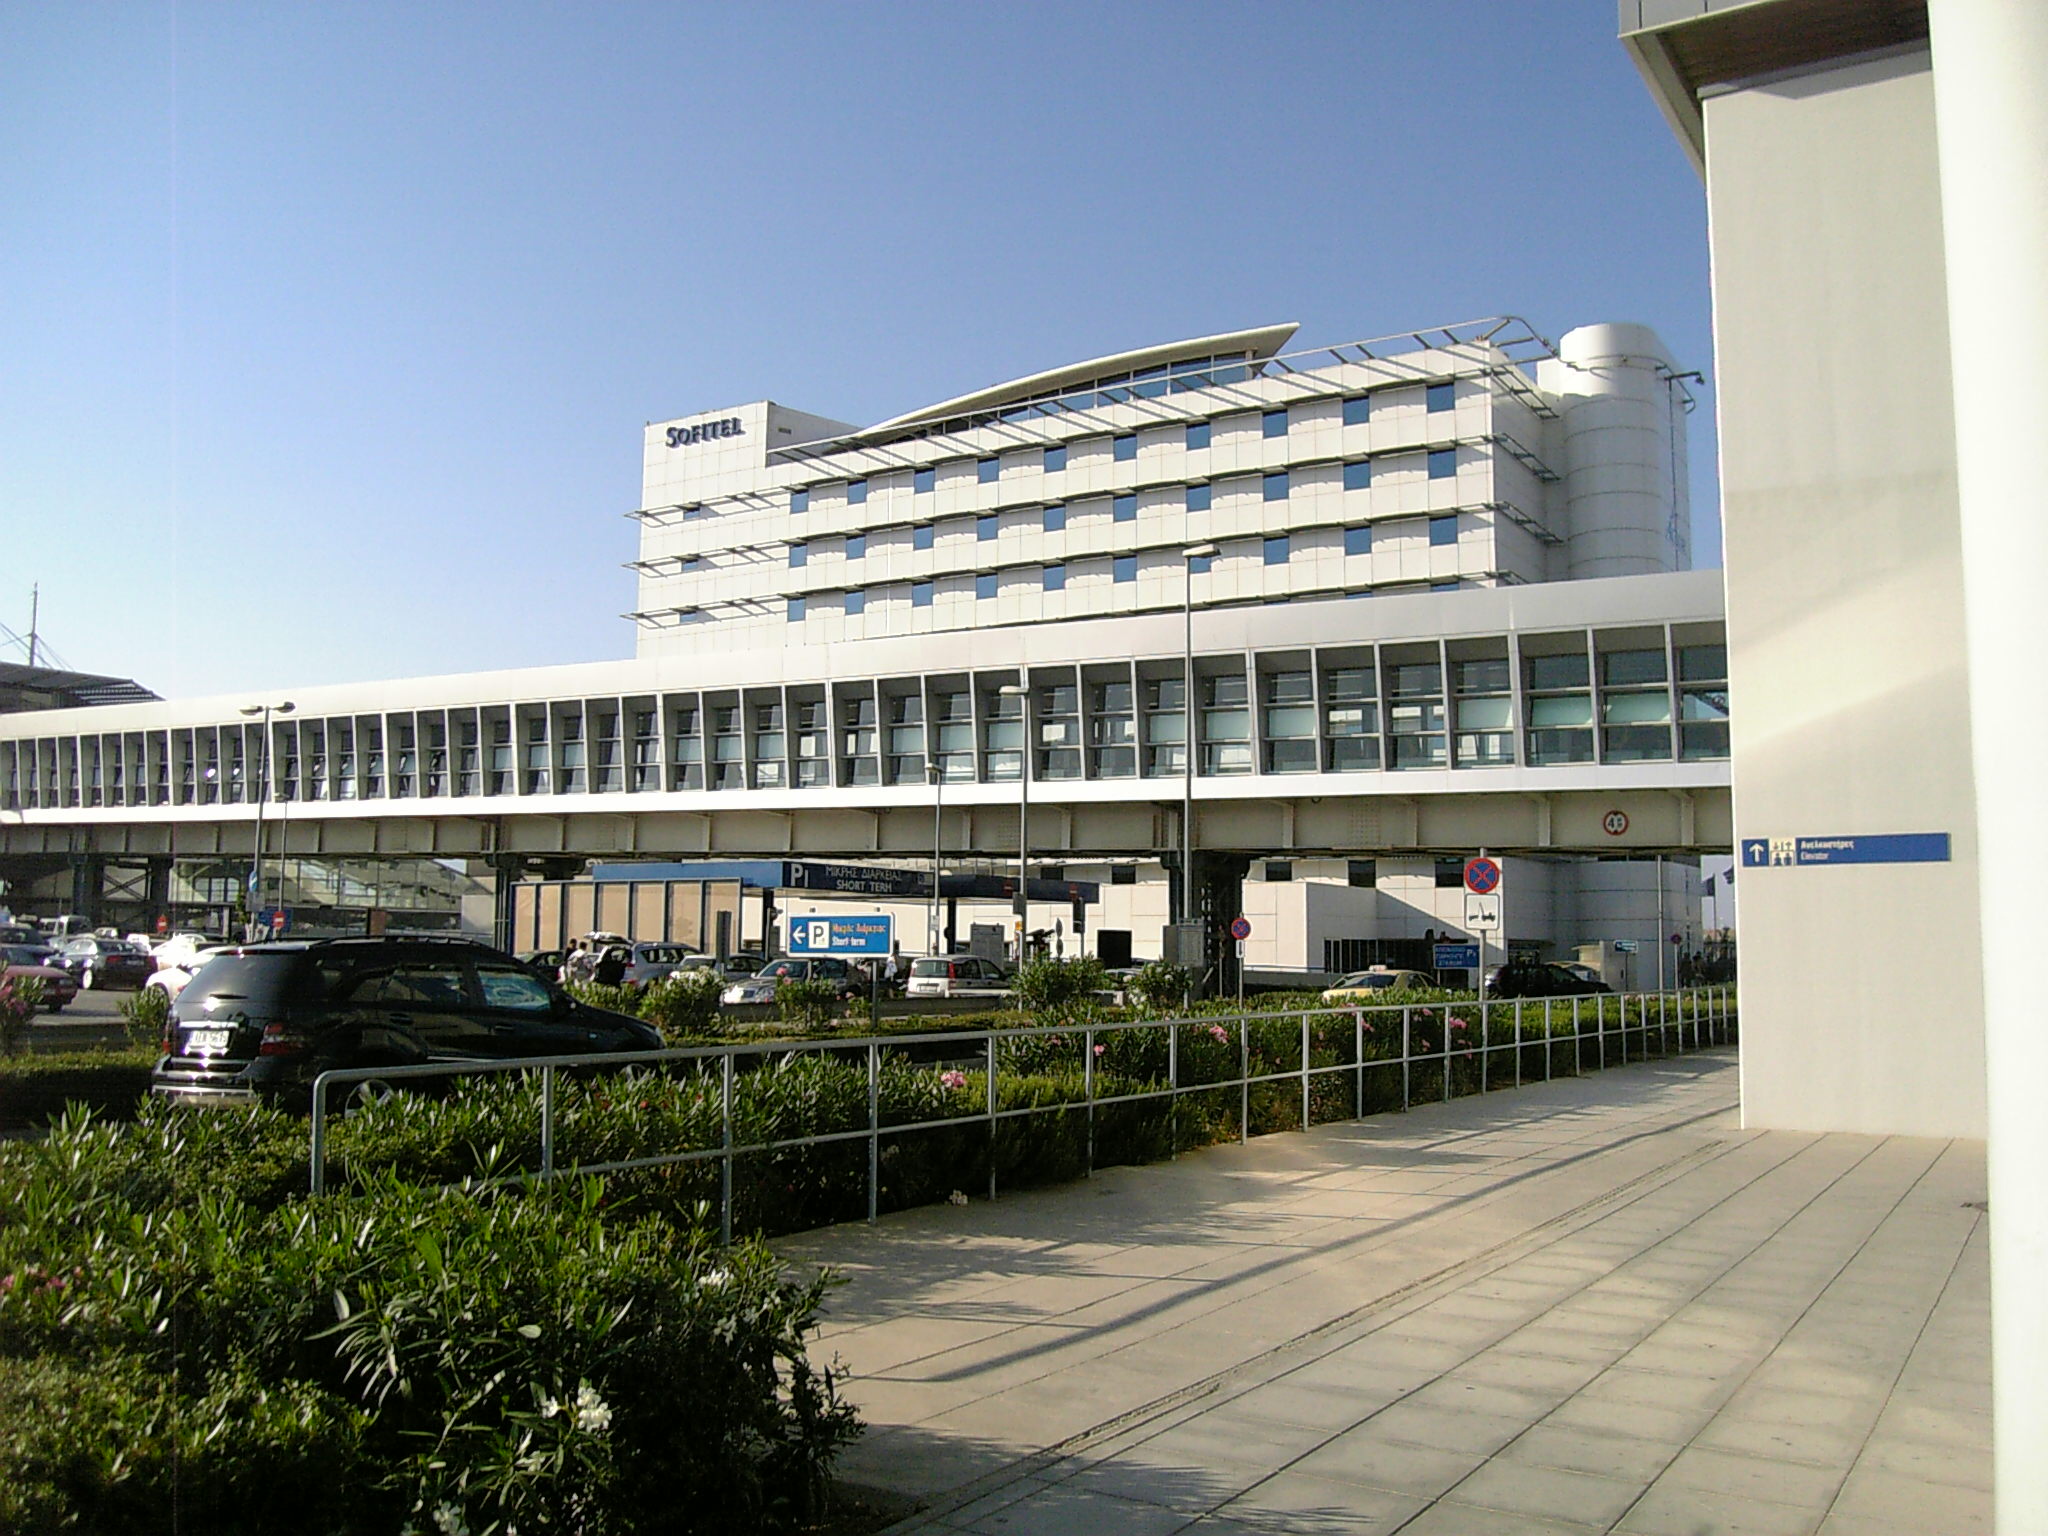 Athens International Airport footbridge and hotel